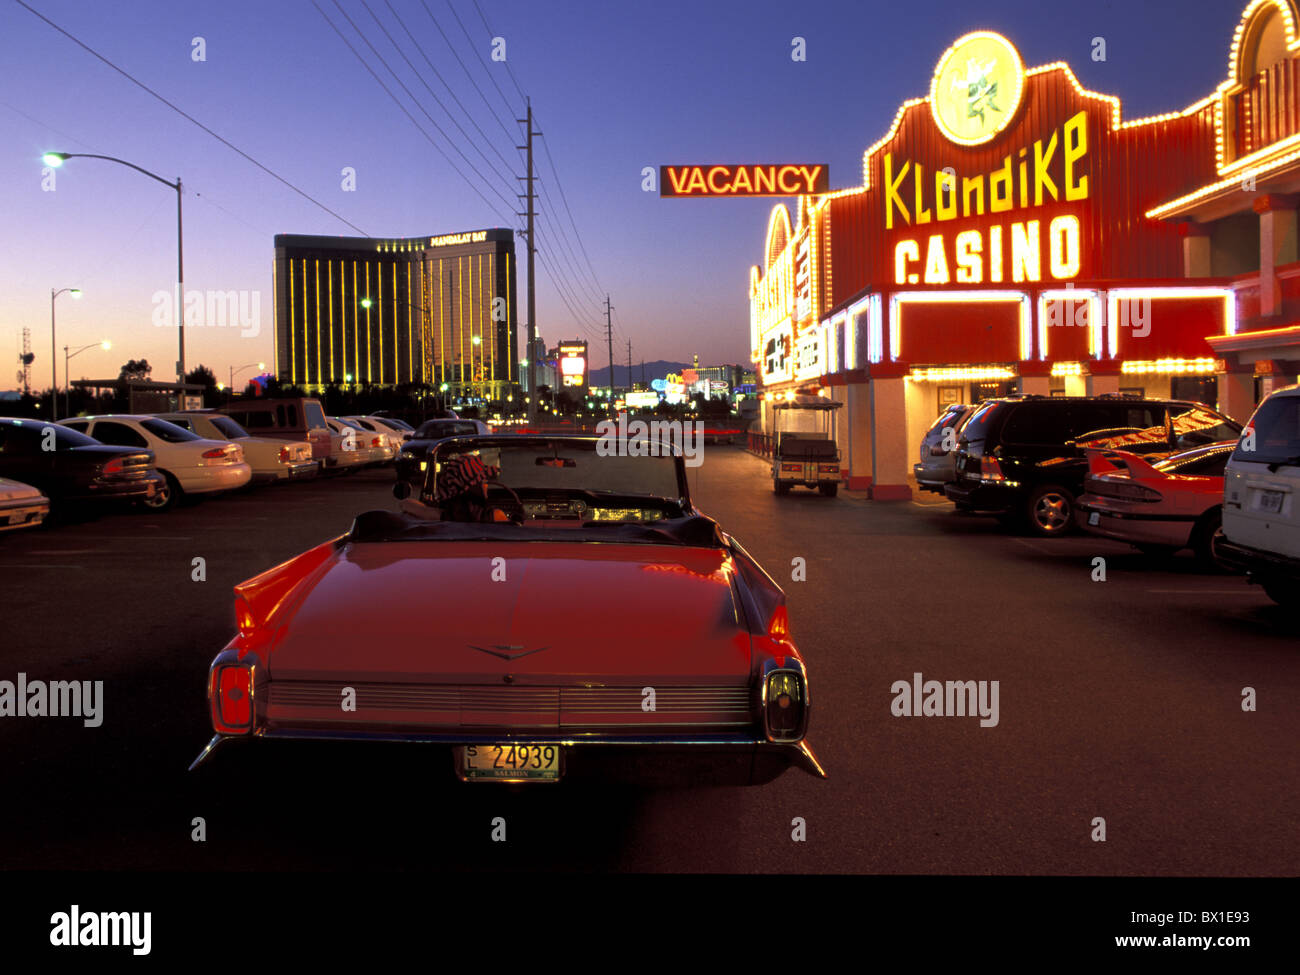 1962 Caddy Klondike Casino Las Vegas Nevada USA America United States car vintage car cabriolet Stock Photo